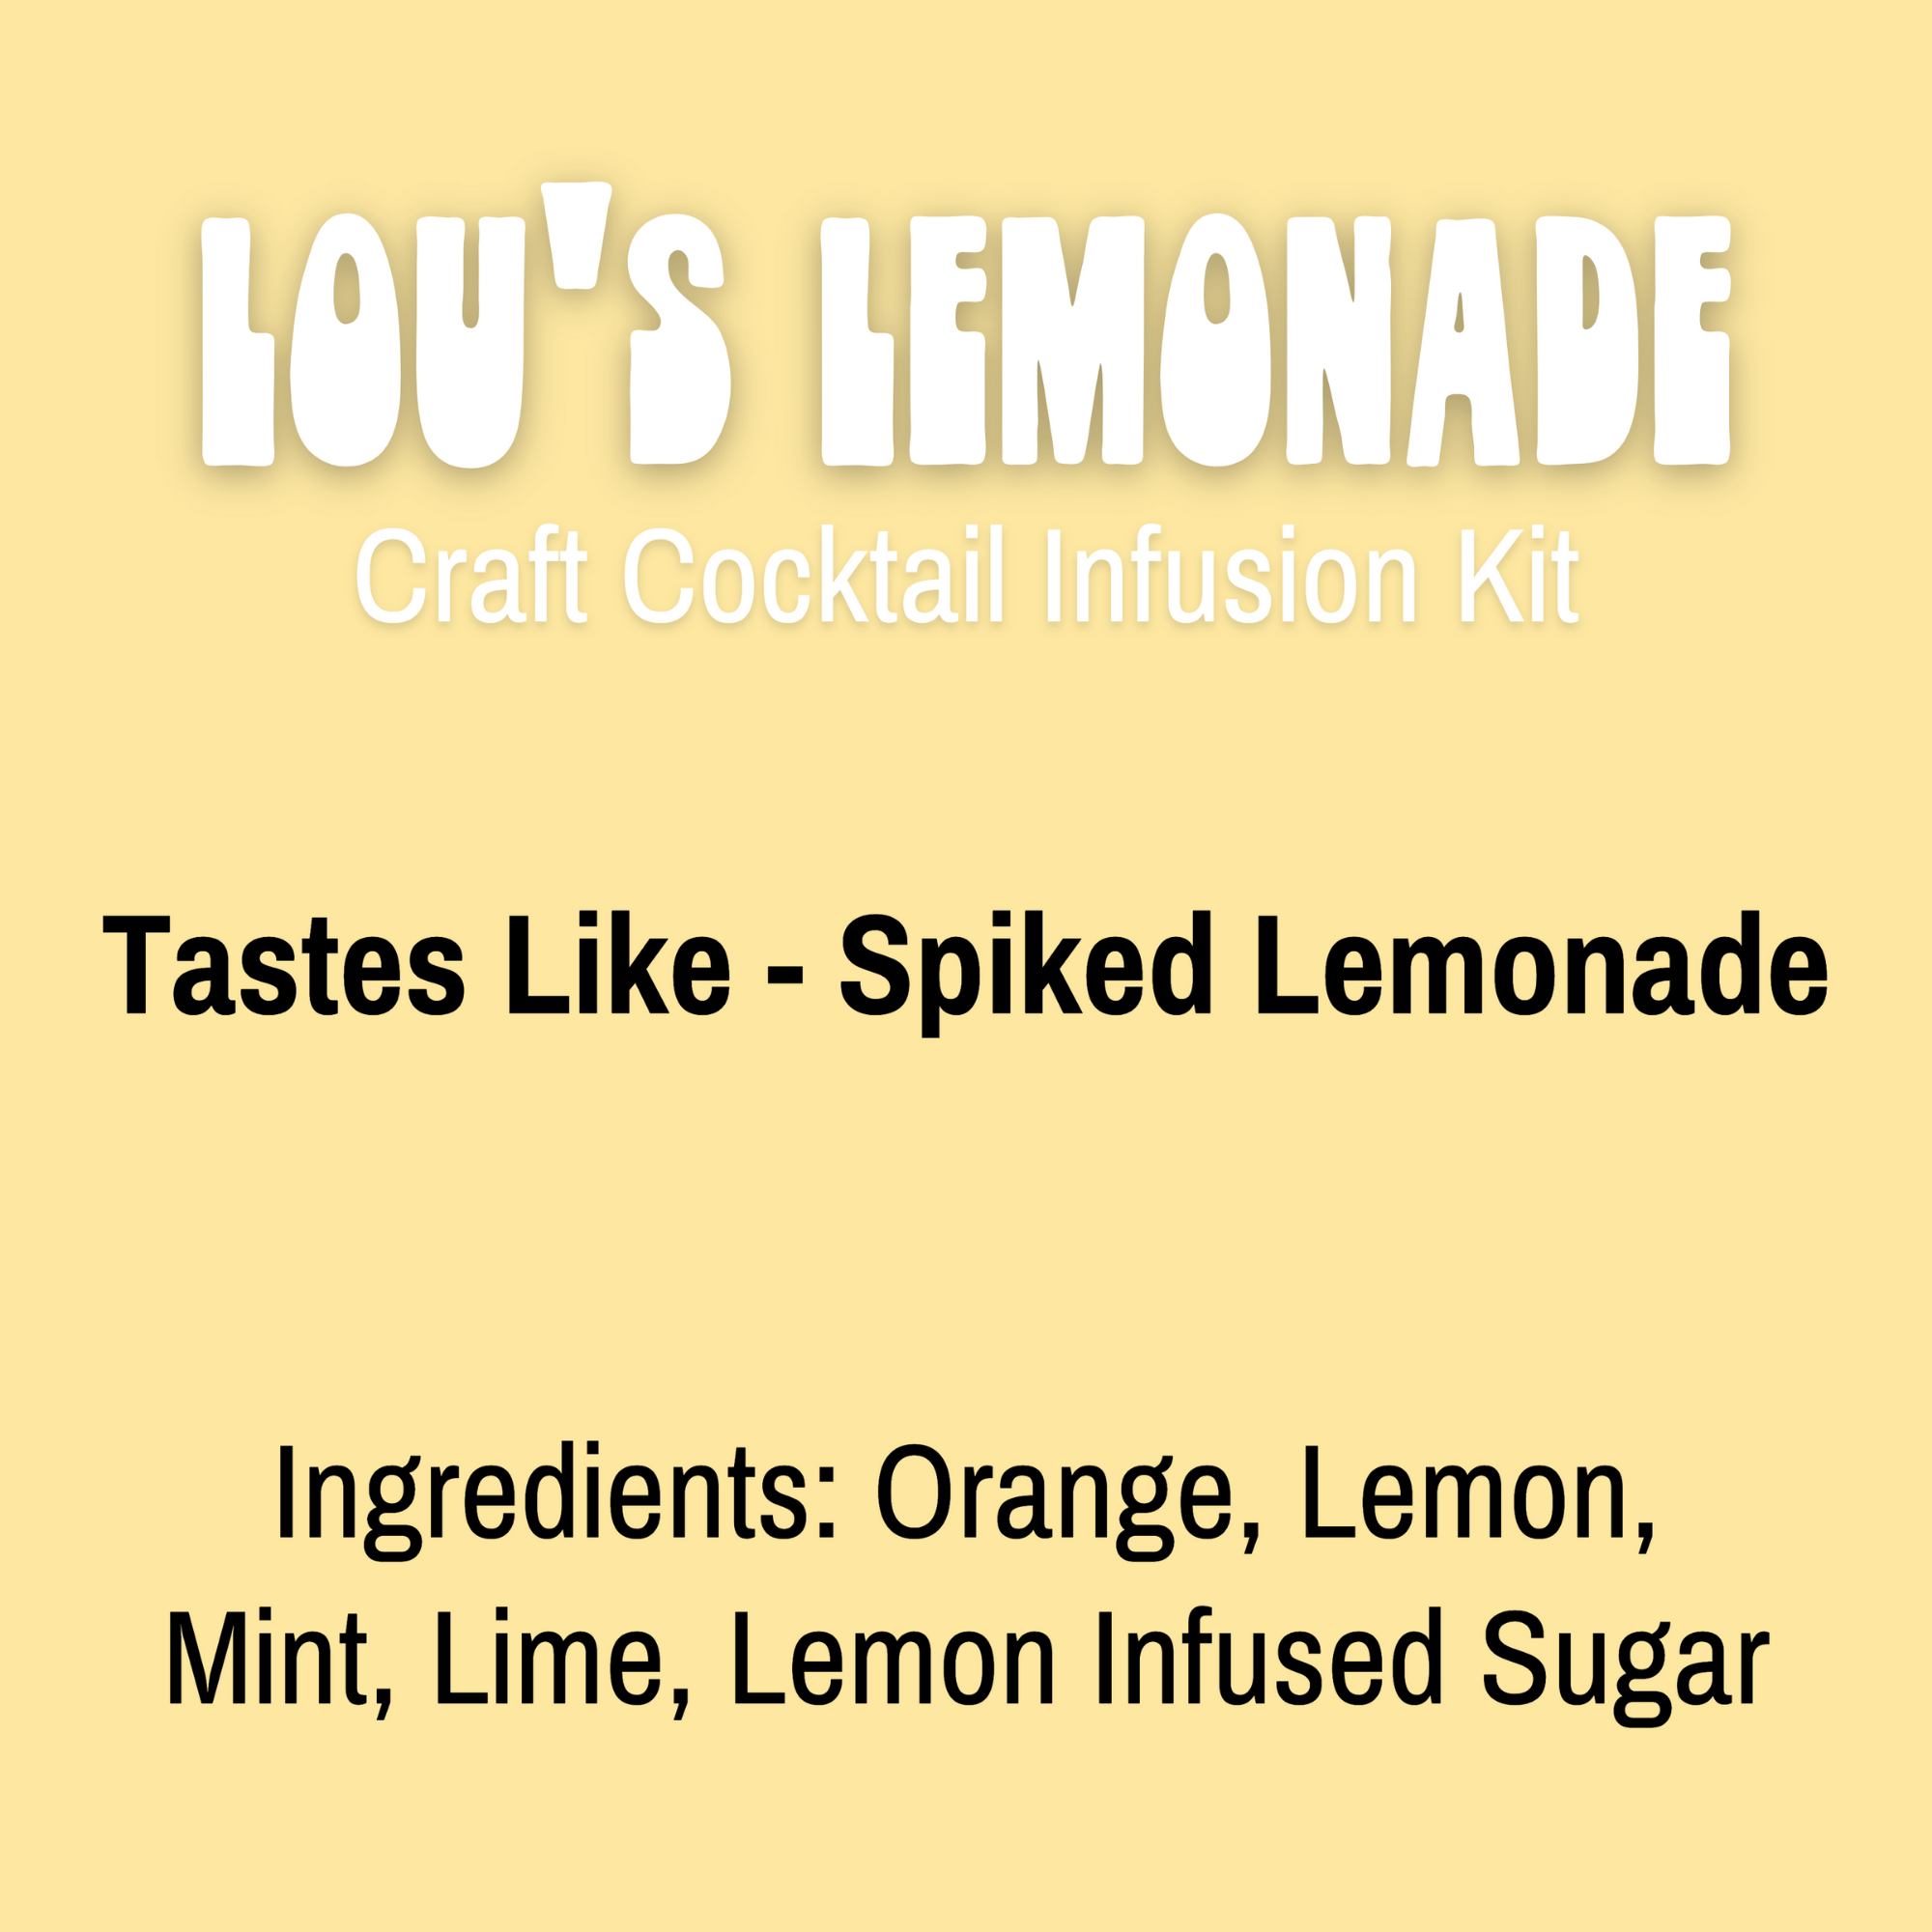 Lou's Lemonade Cocktail Infusion Kits